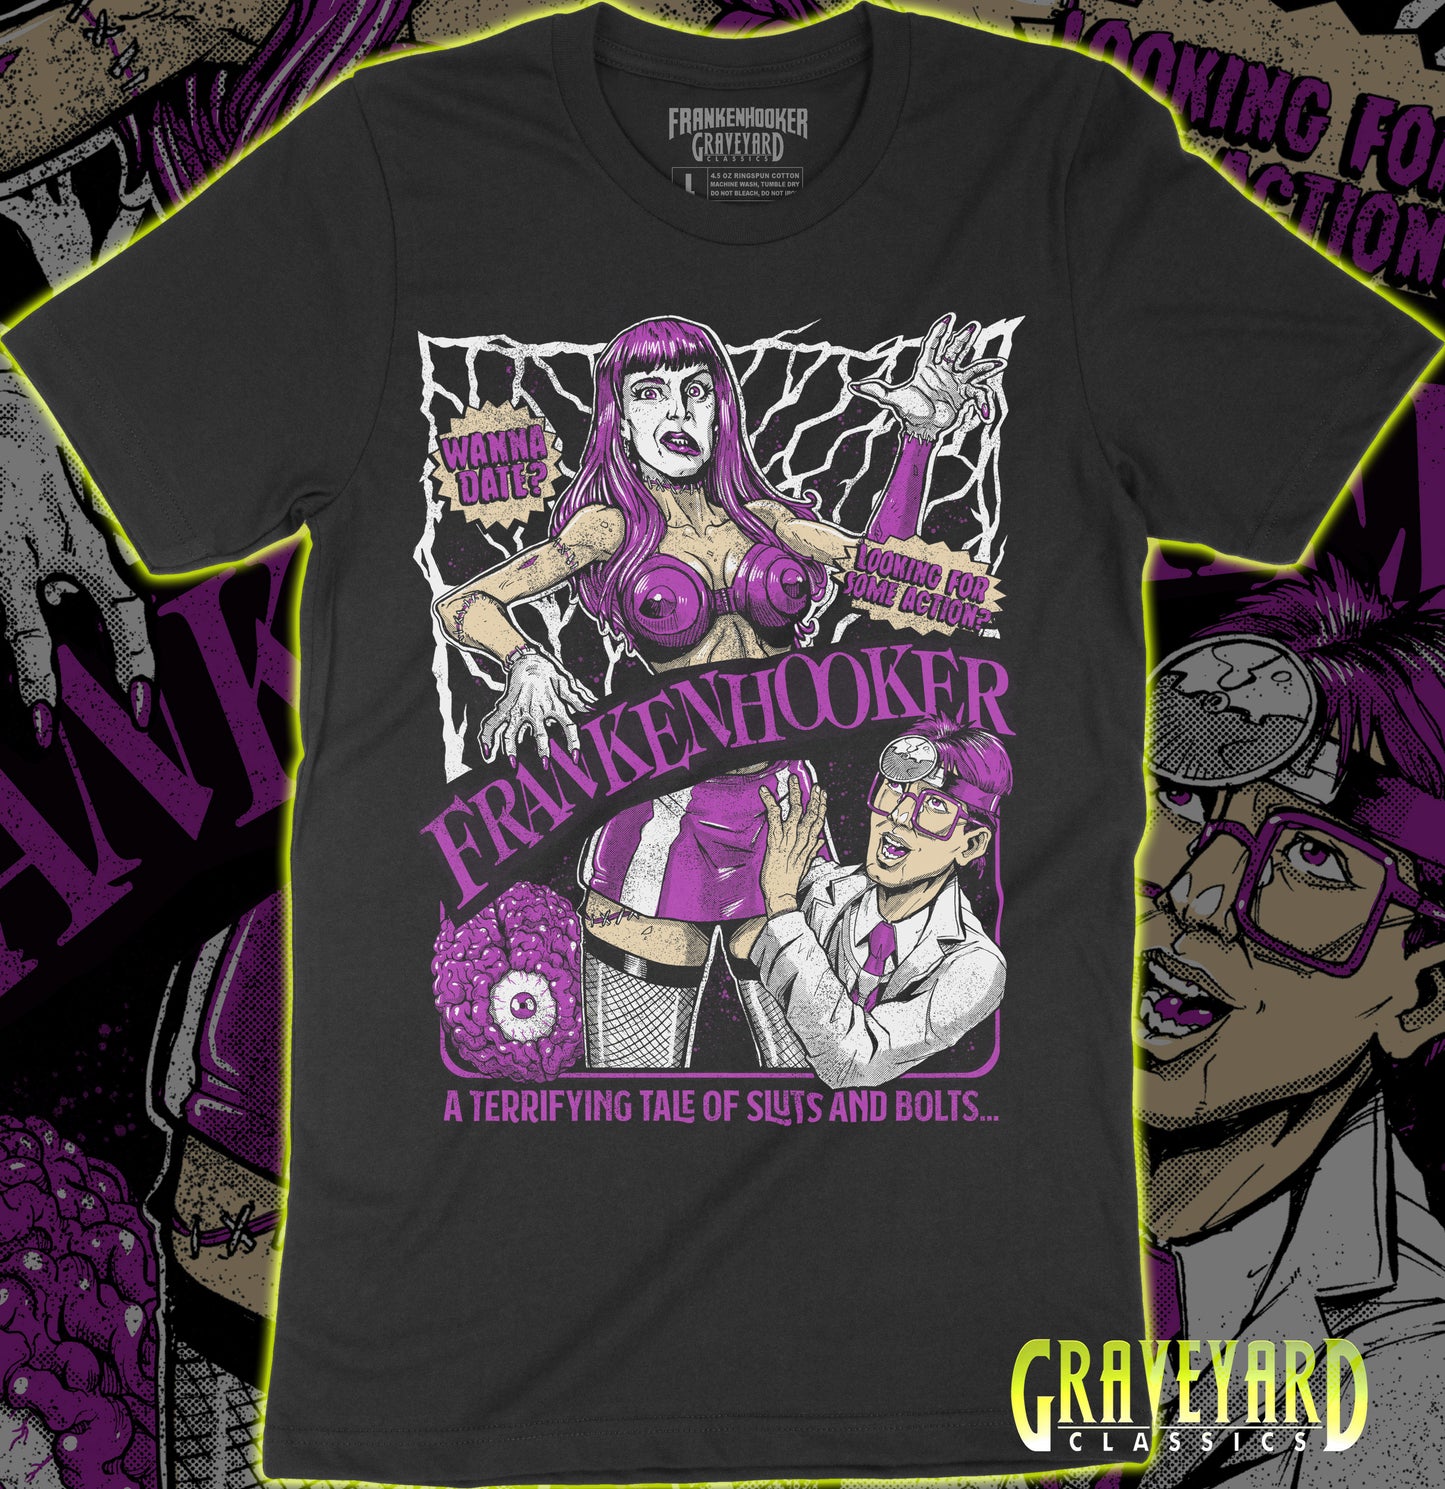 Frankenhooker - a Terrifying Tale T-Shirt